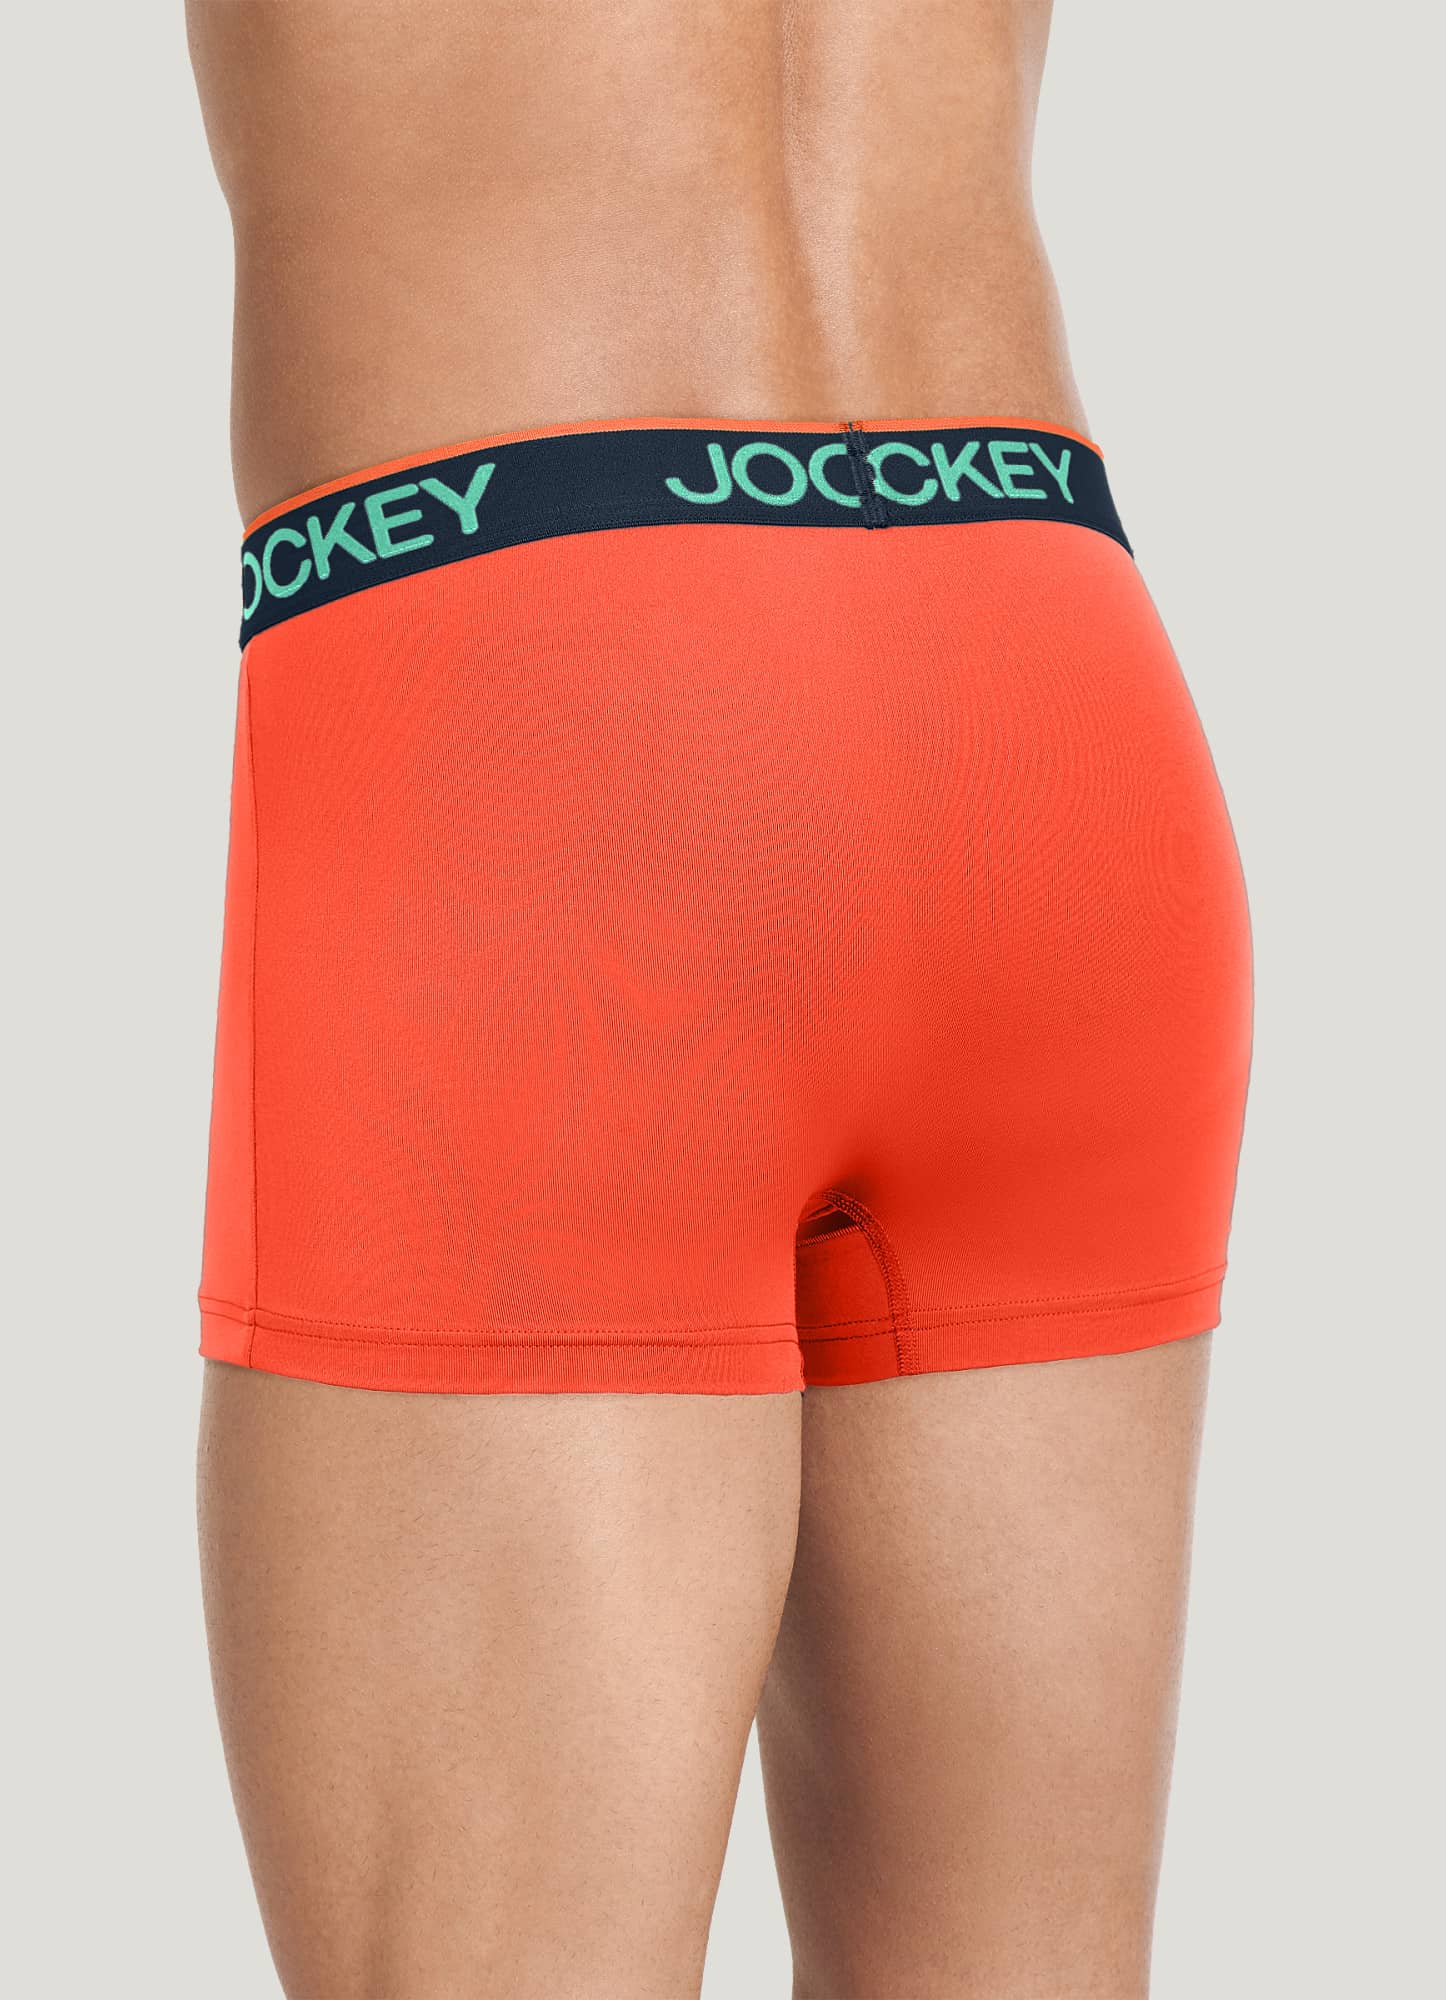 Jockey Men's Underwear Organic Cotton Stretch 4 Trunk - 3 Pack